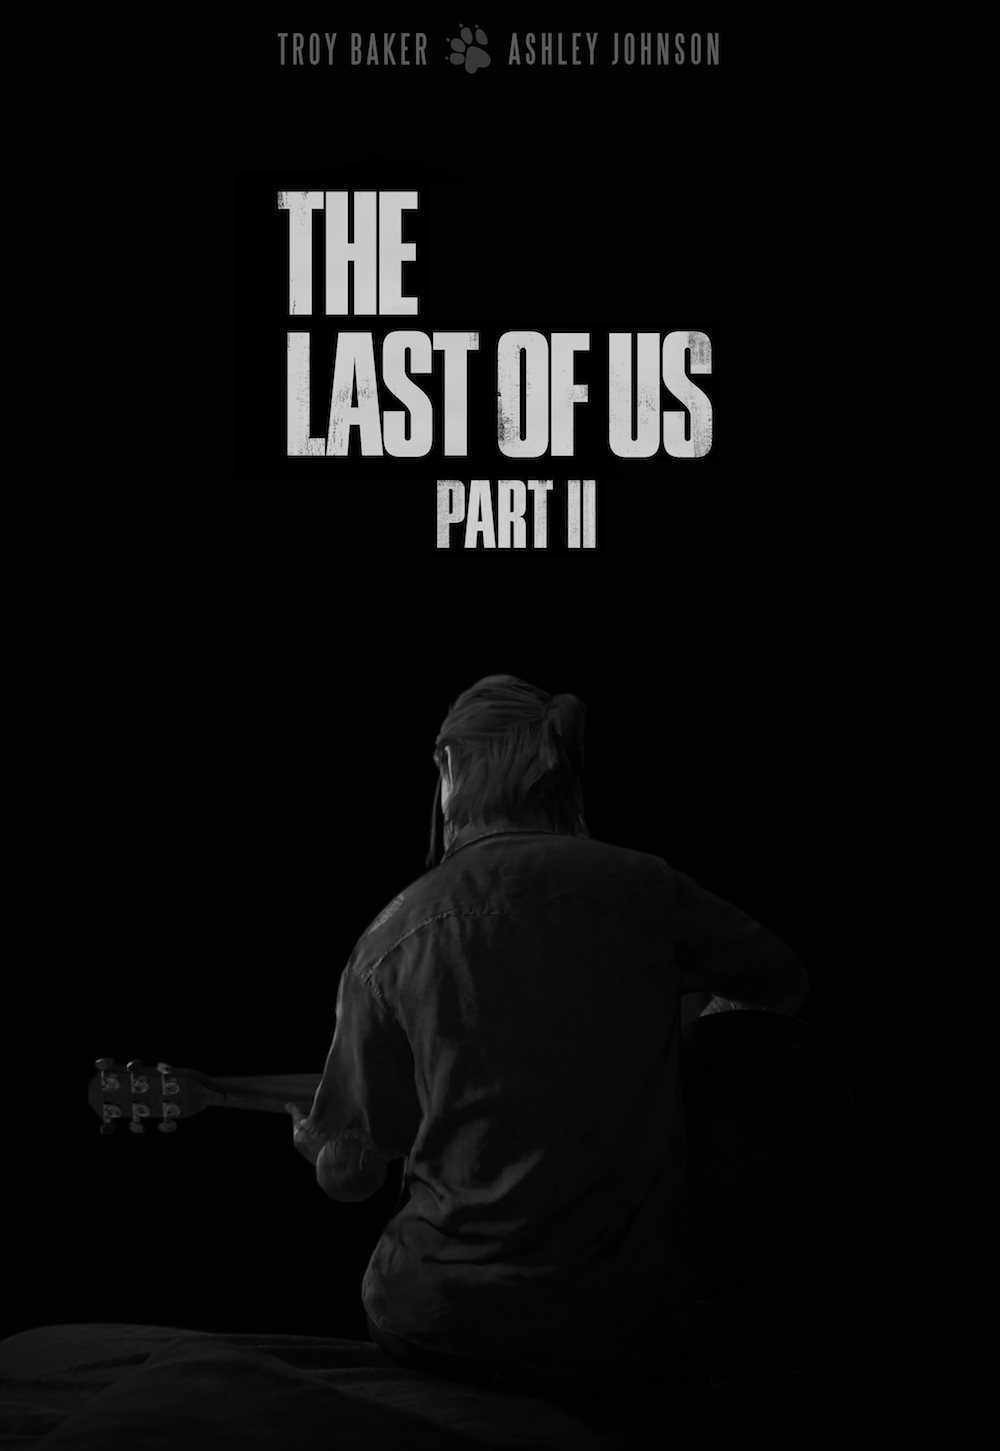 The Last of Us part II